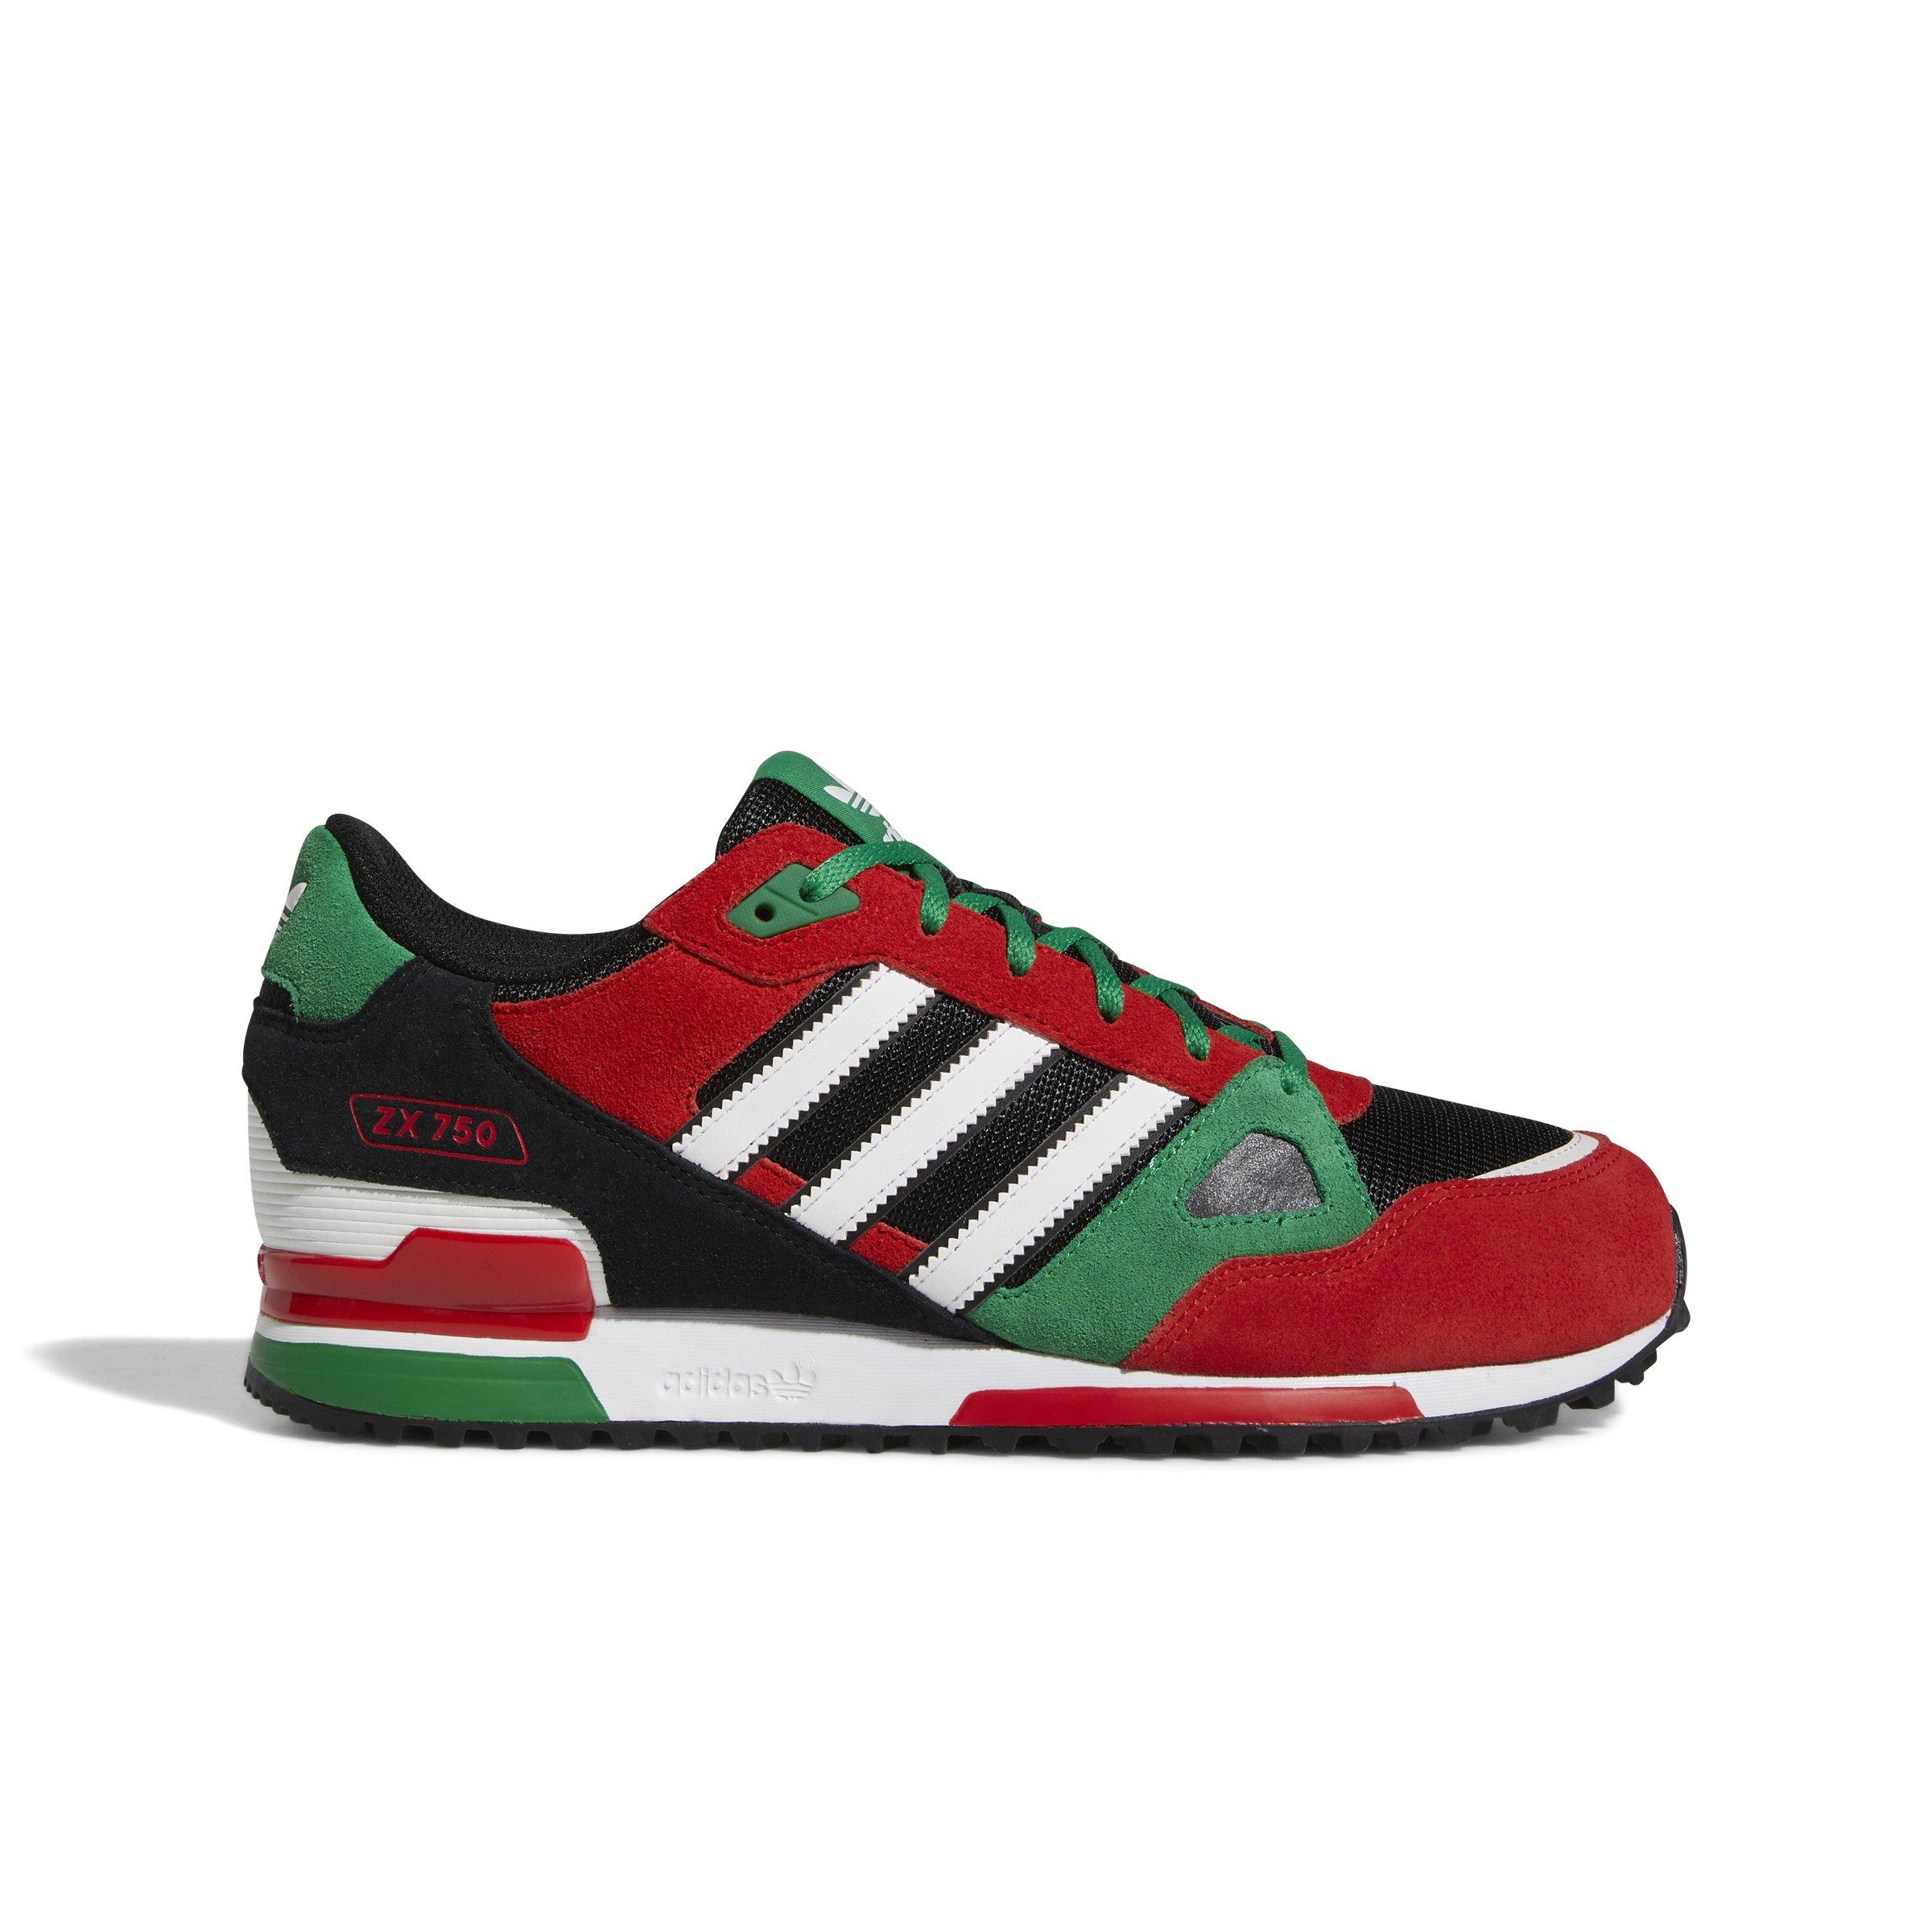 adidas "Core Black/Green/Red" Shoe